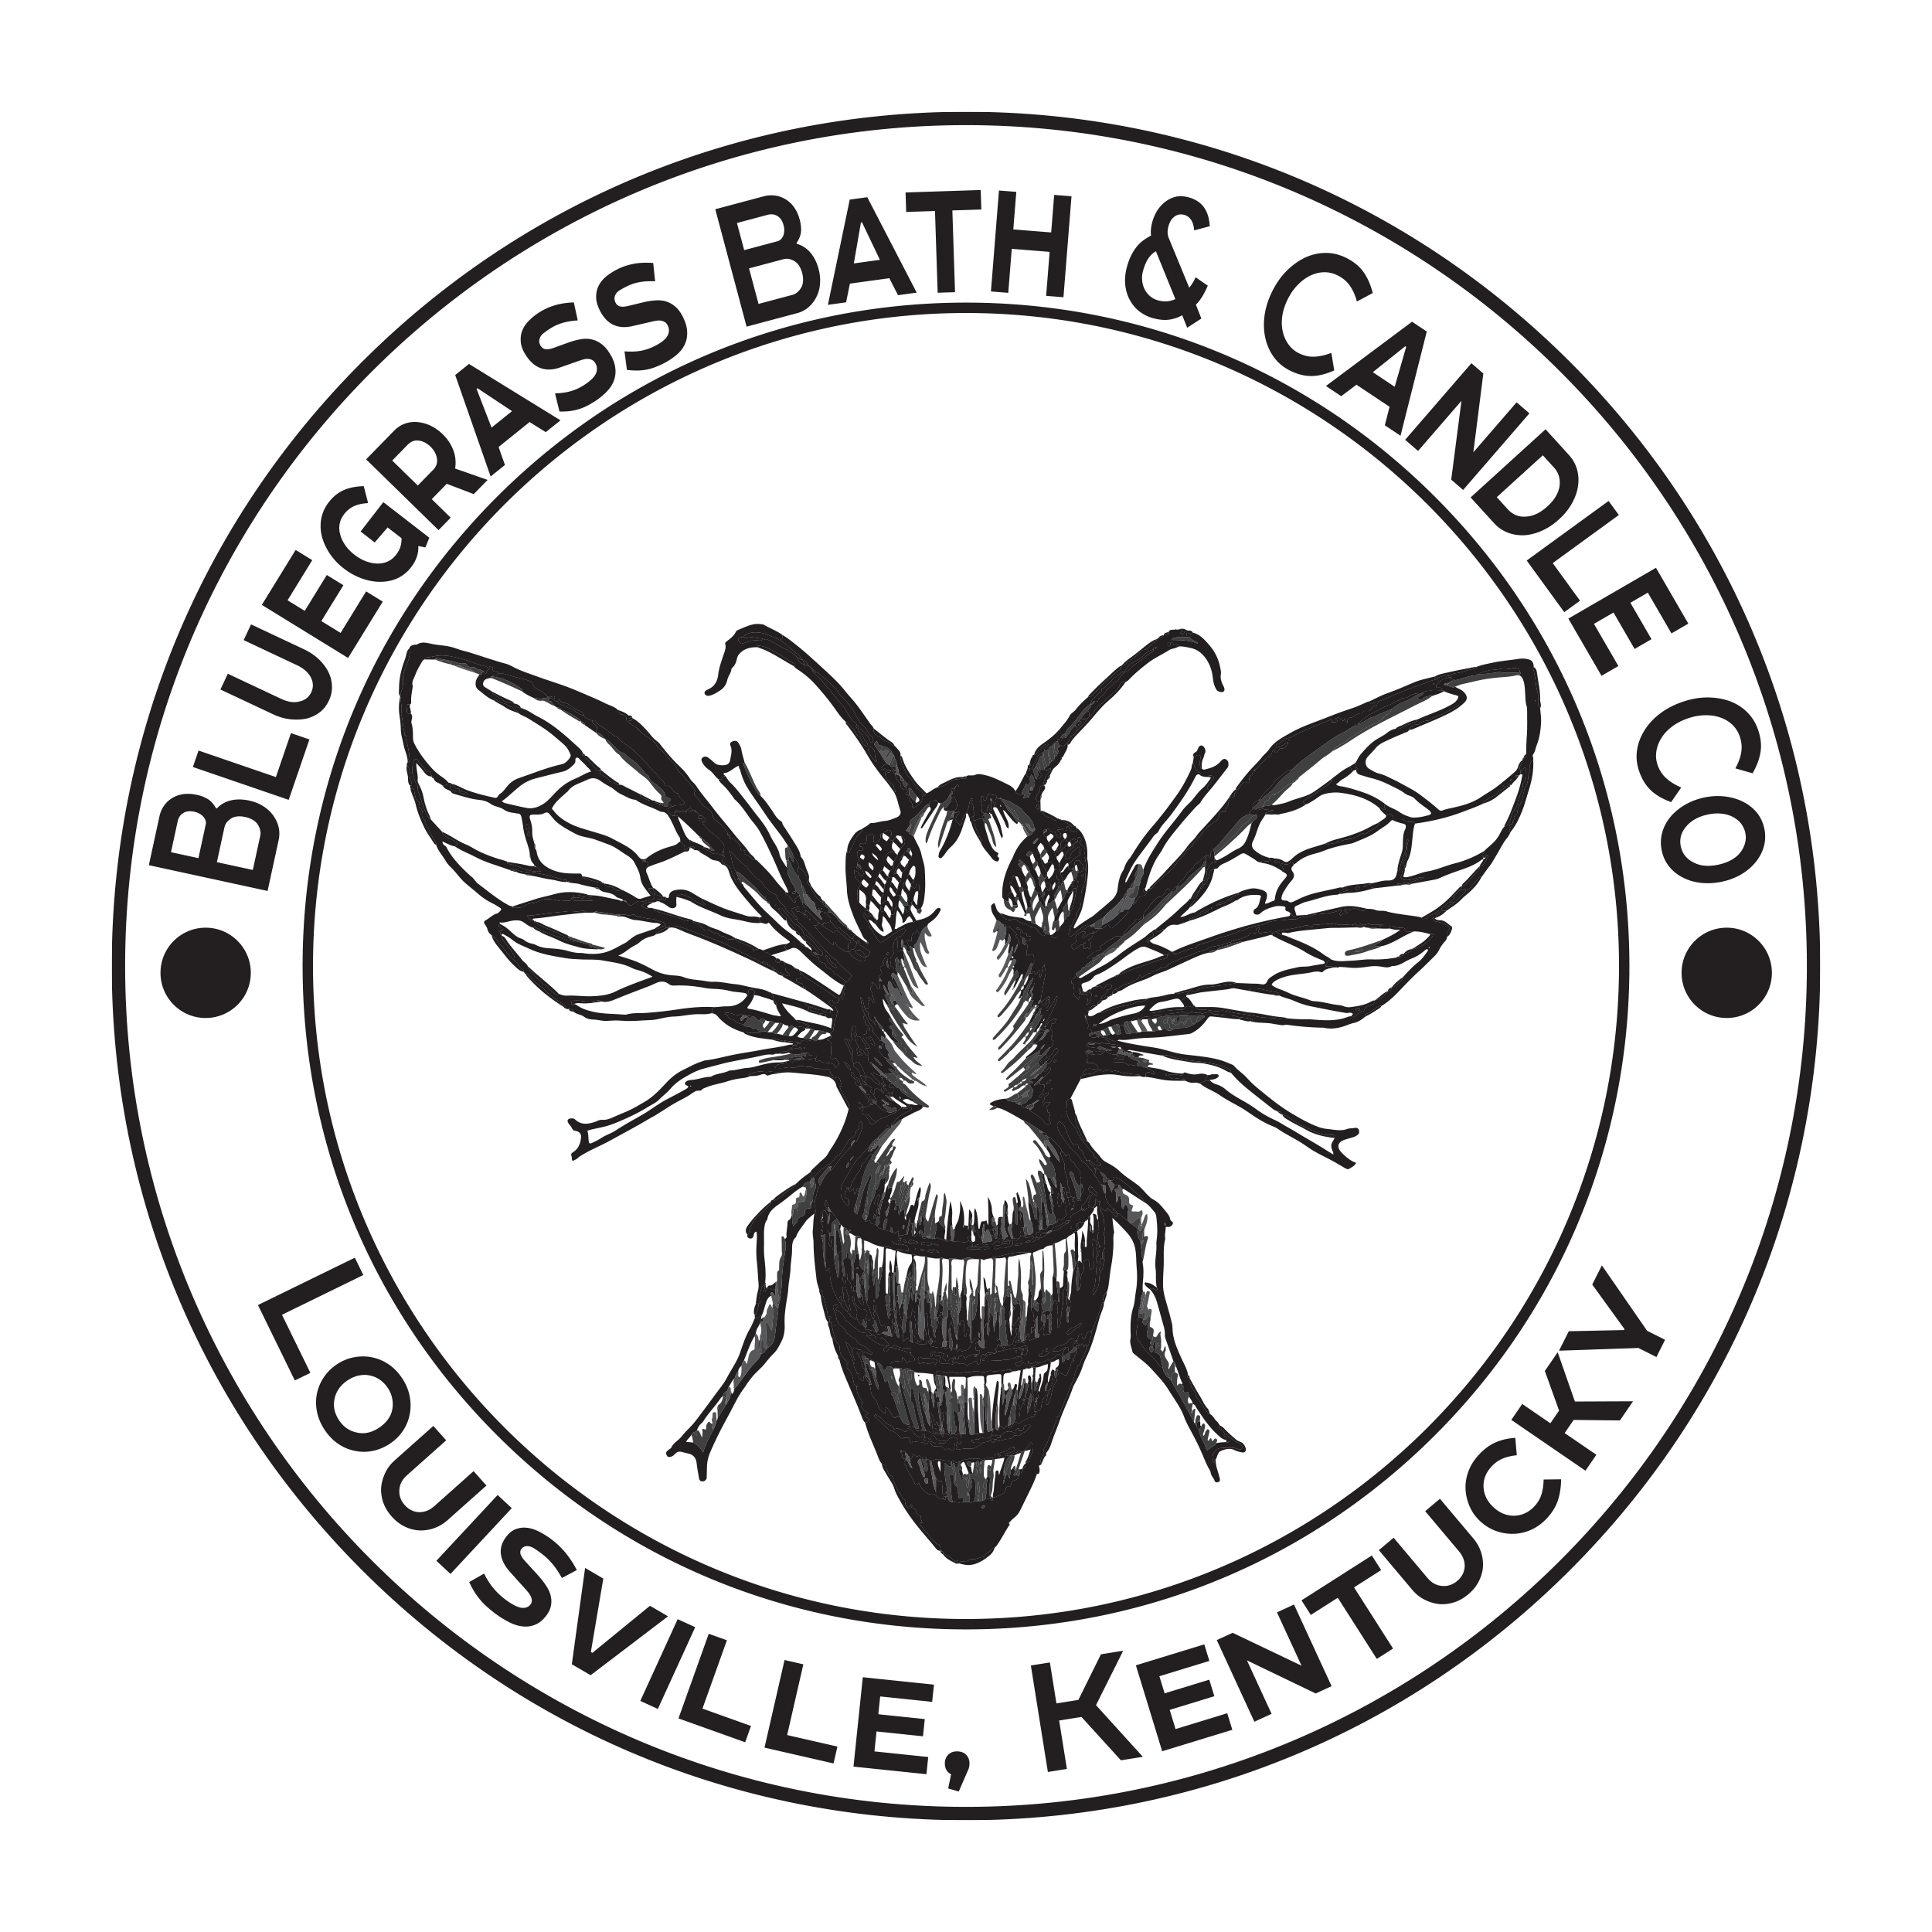 Bluegrass Bath & Candle Company 